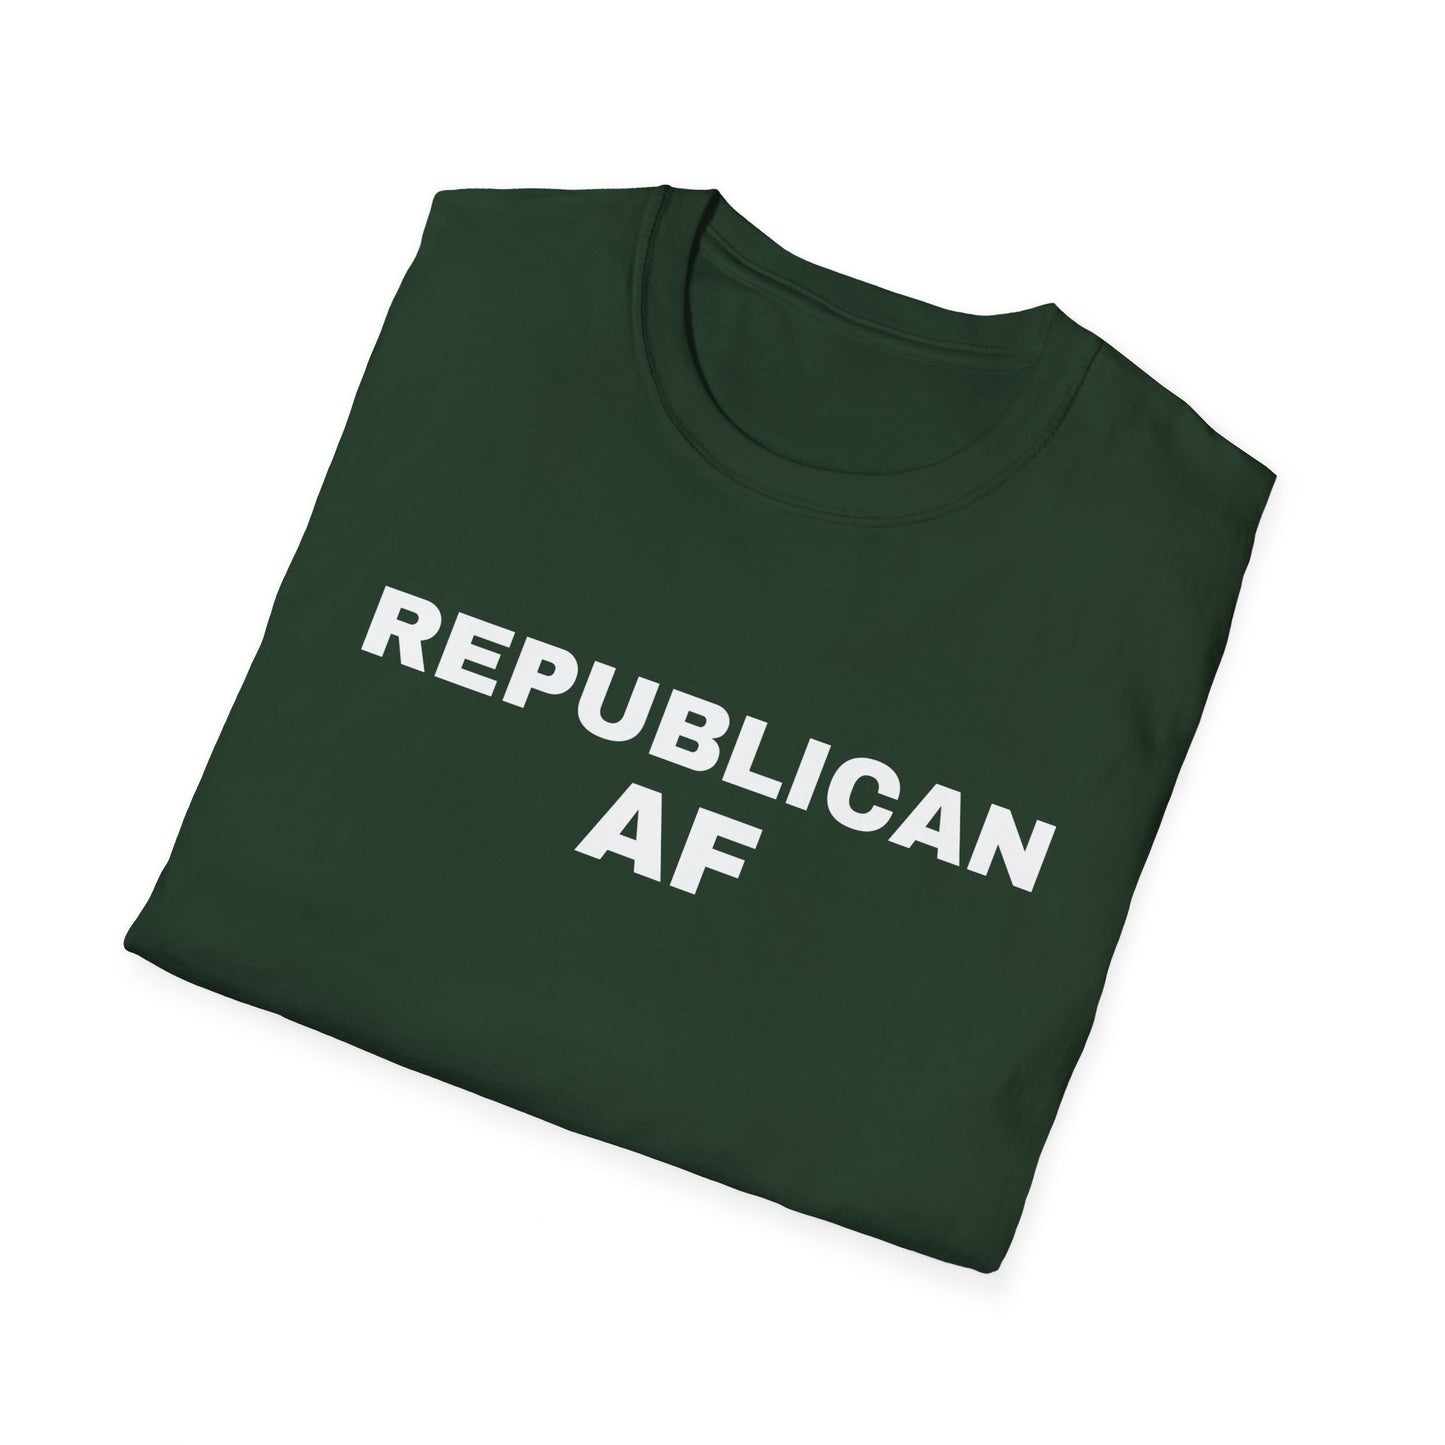 Republican AF Men's Tshirt (White Logo)